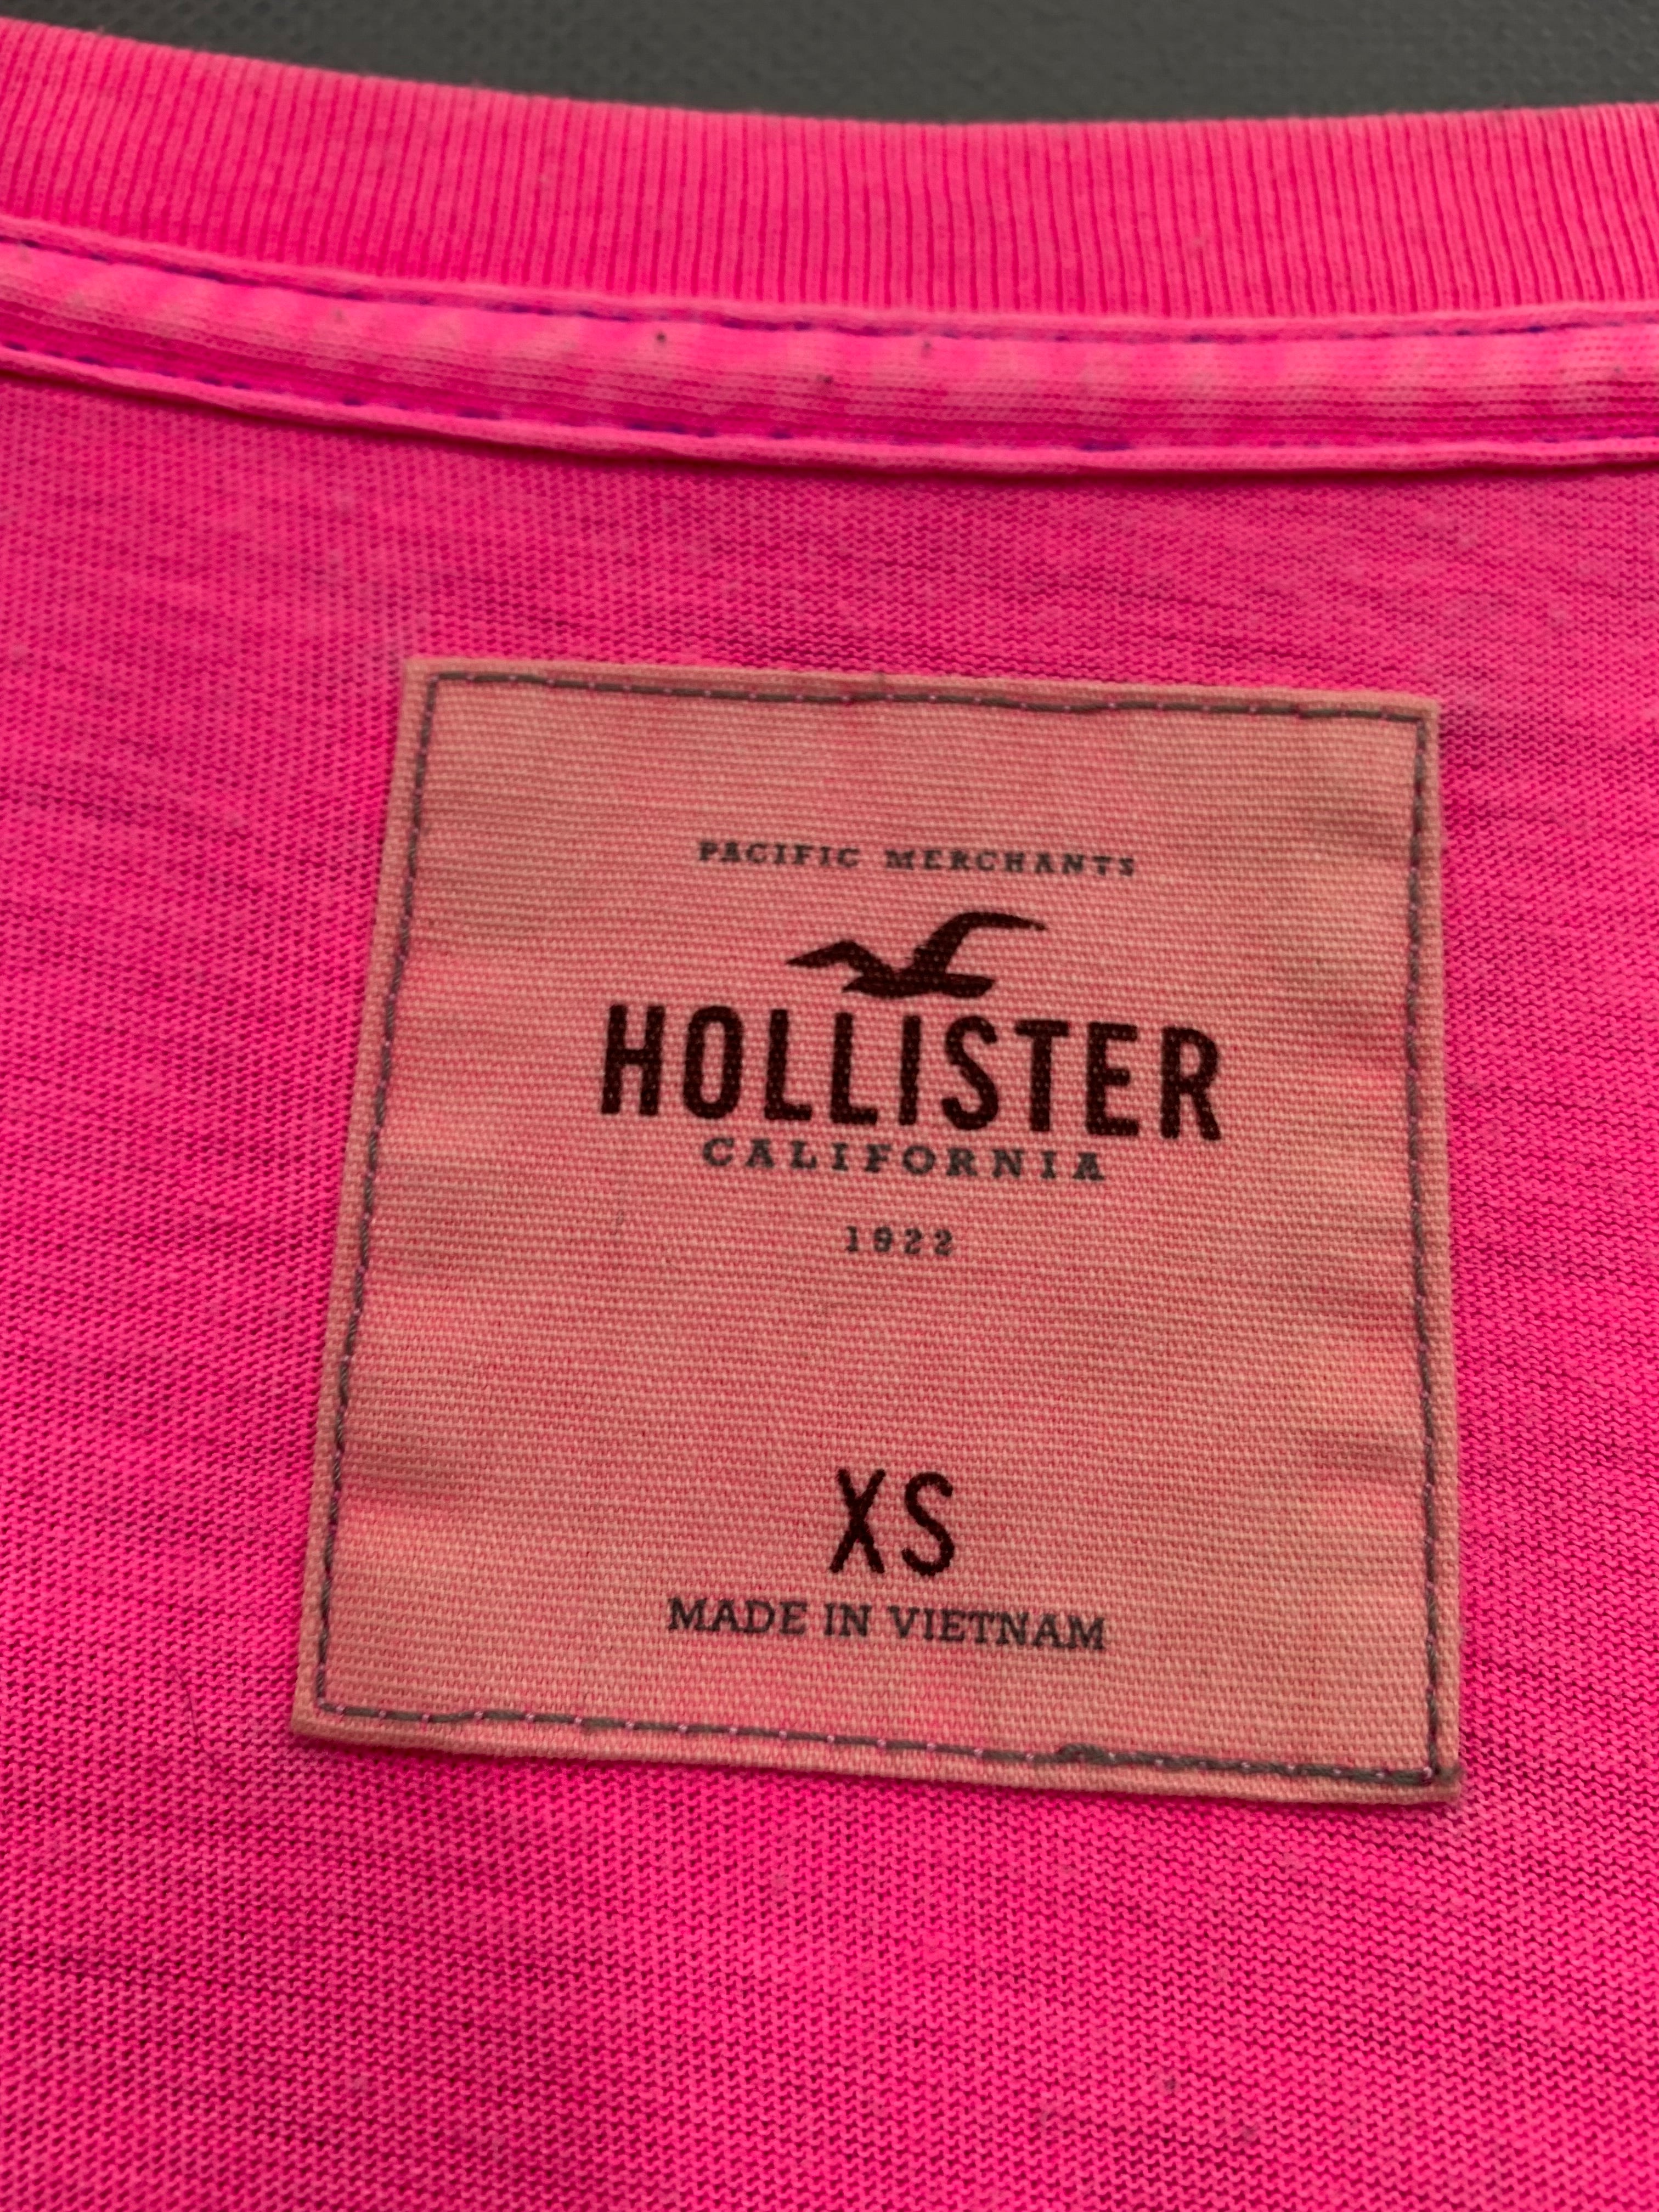 Hollister Branded Original For Cotton Women T Shirt